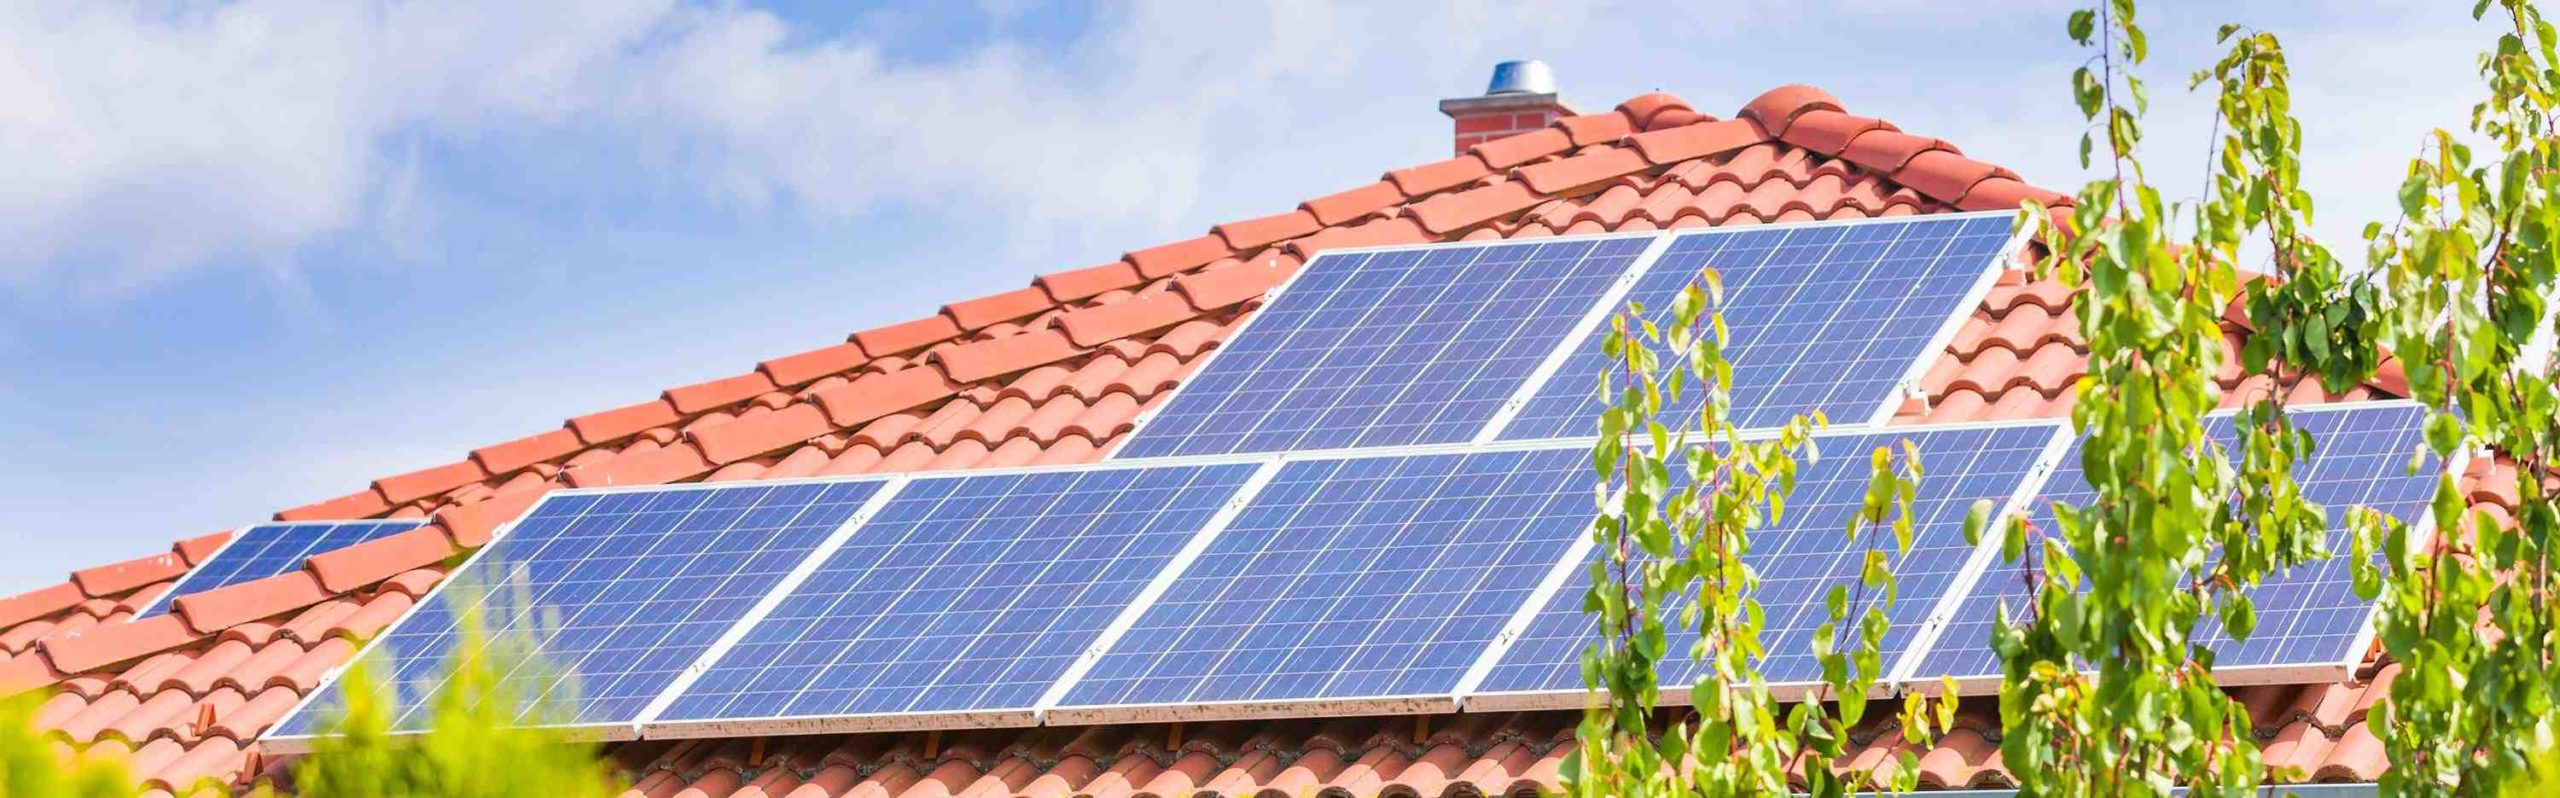 Does Sunrun sell solar panels?